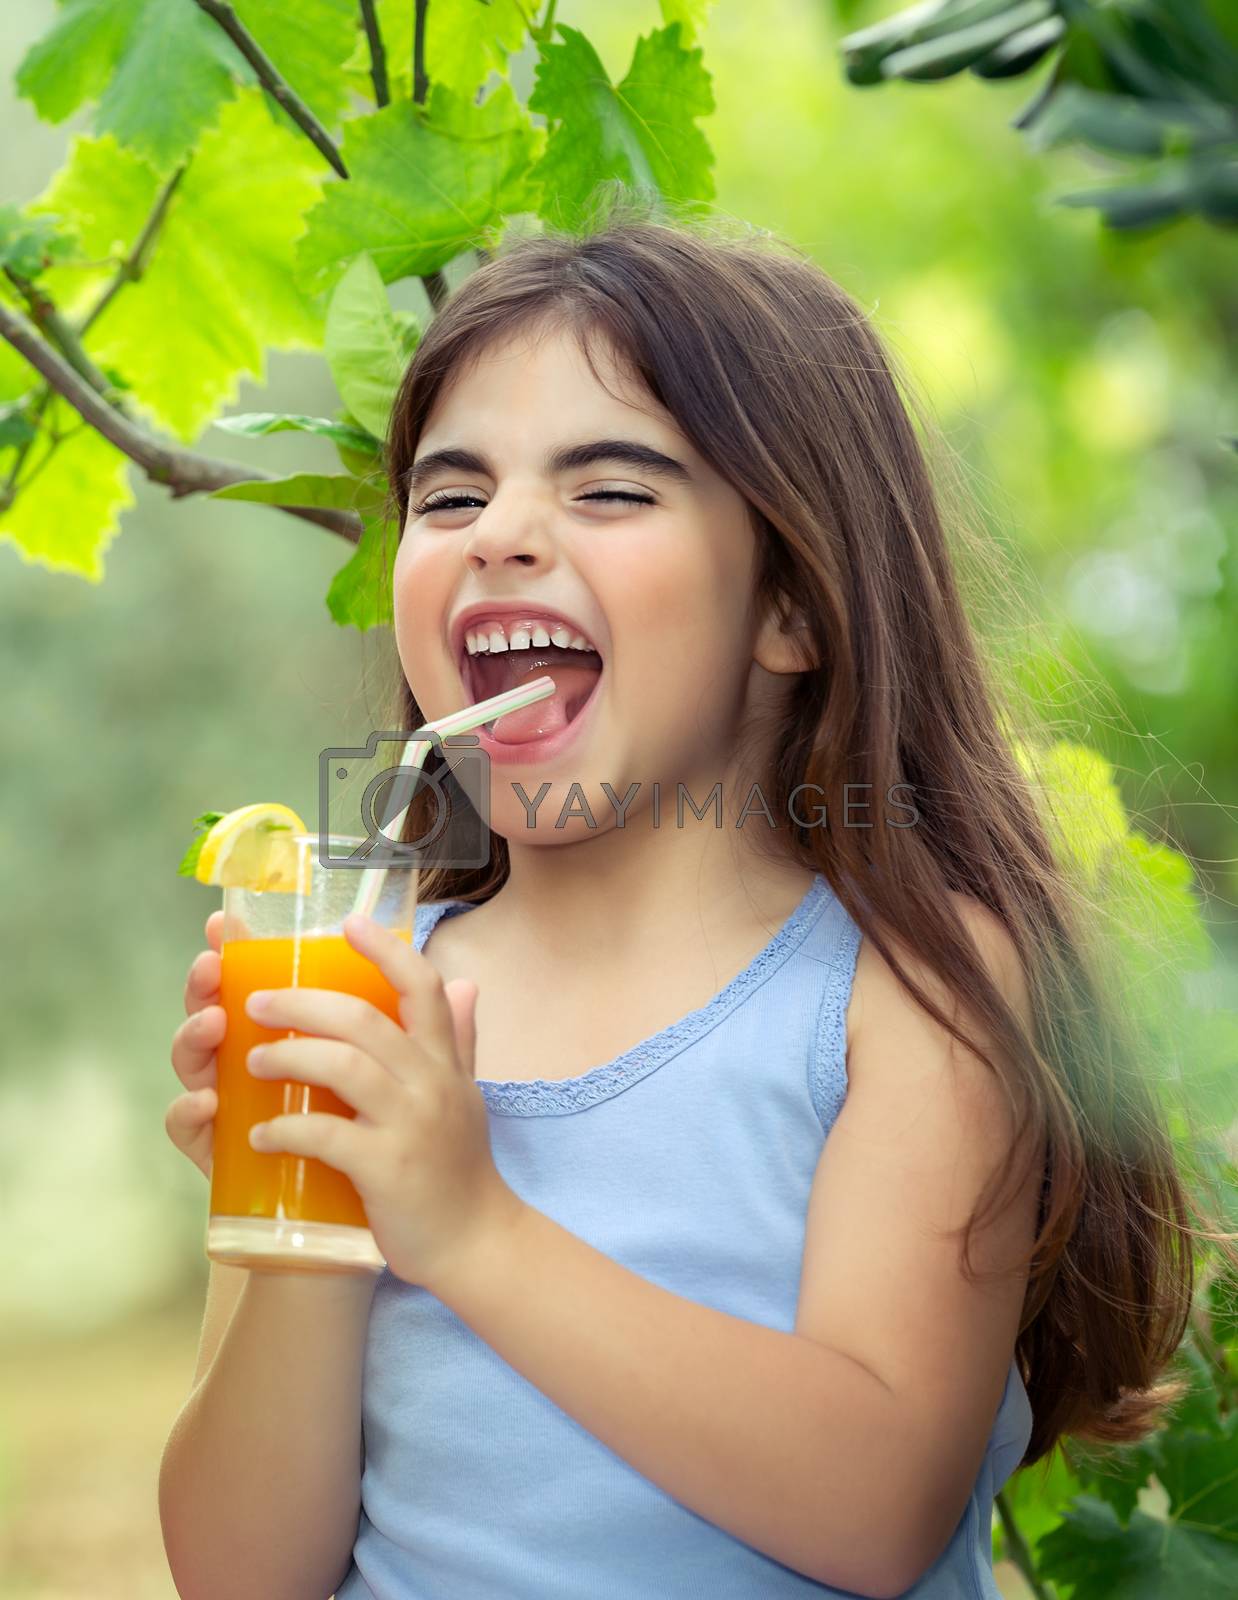 Royalty free image of Joyful girl drinking juice by Anna_Omelchenko